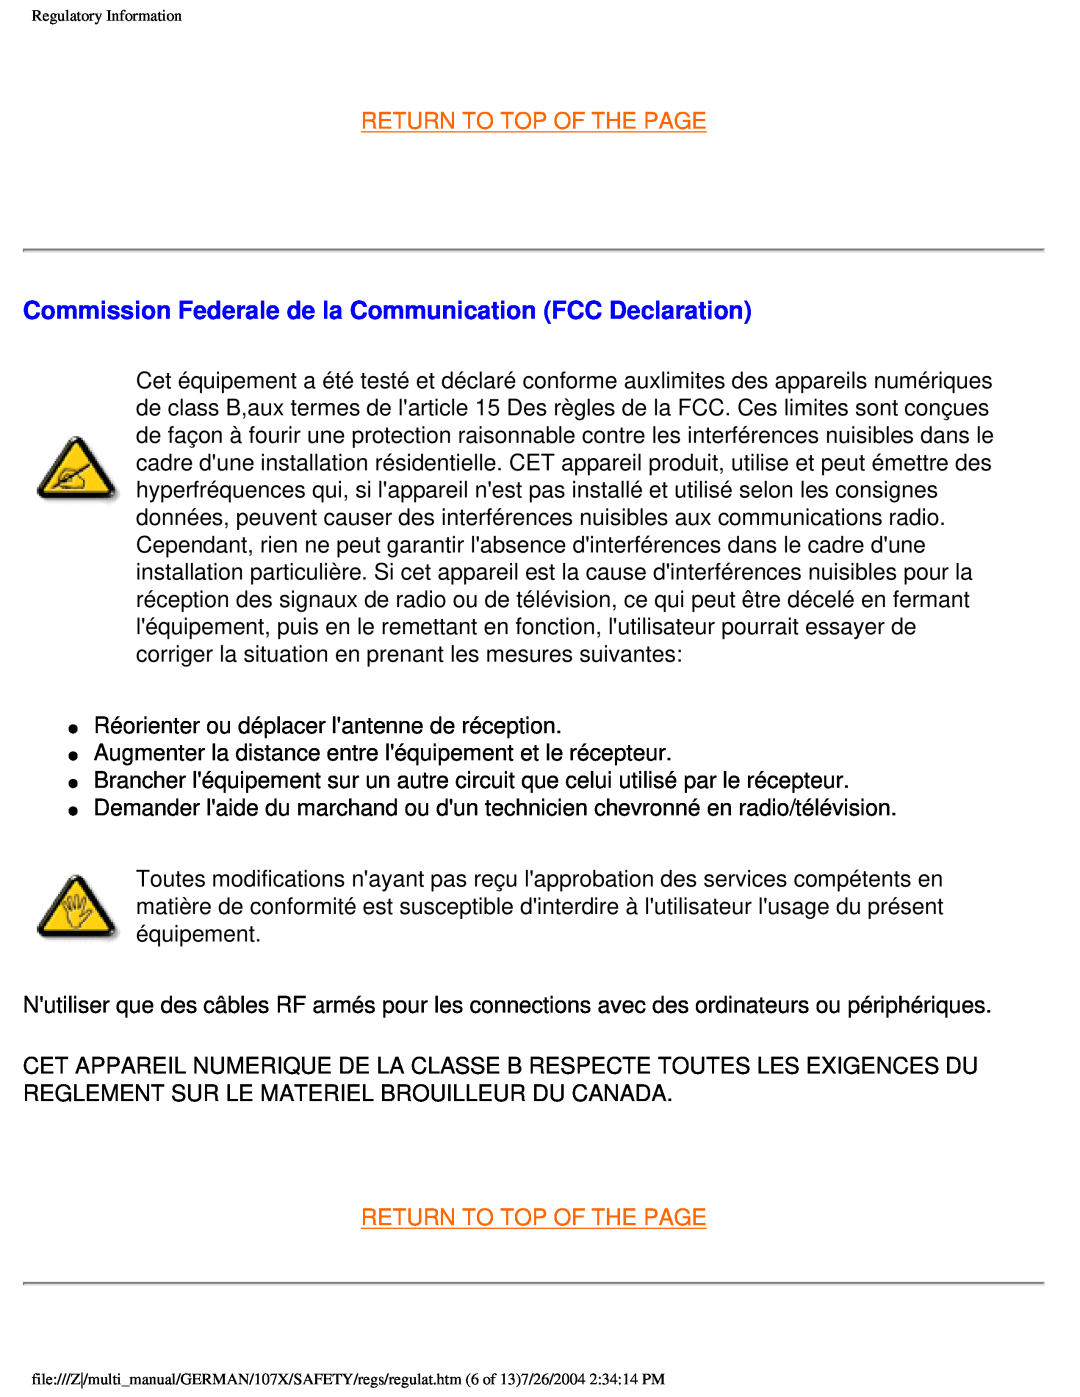 Philips 107X2 user manual Commission Federale de la Communication FCC Declaration, Return To Top Of The Page 